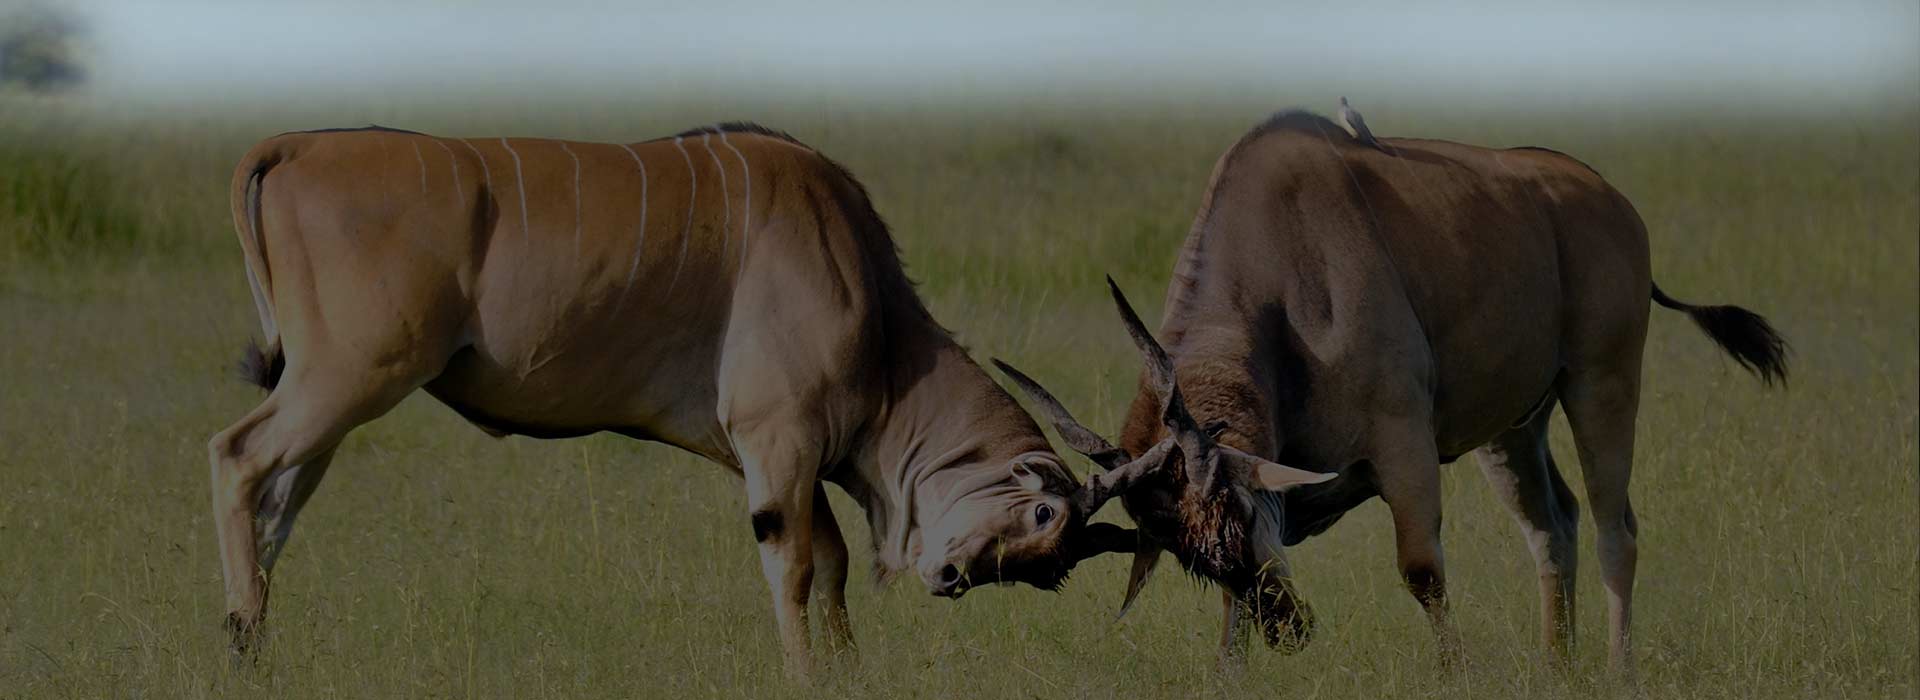 Kenya Wildlife Safari Amboseli, Lake Naivasha & Maasai Mara